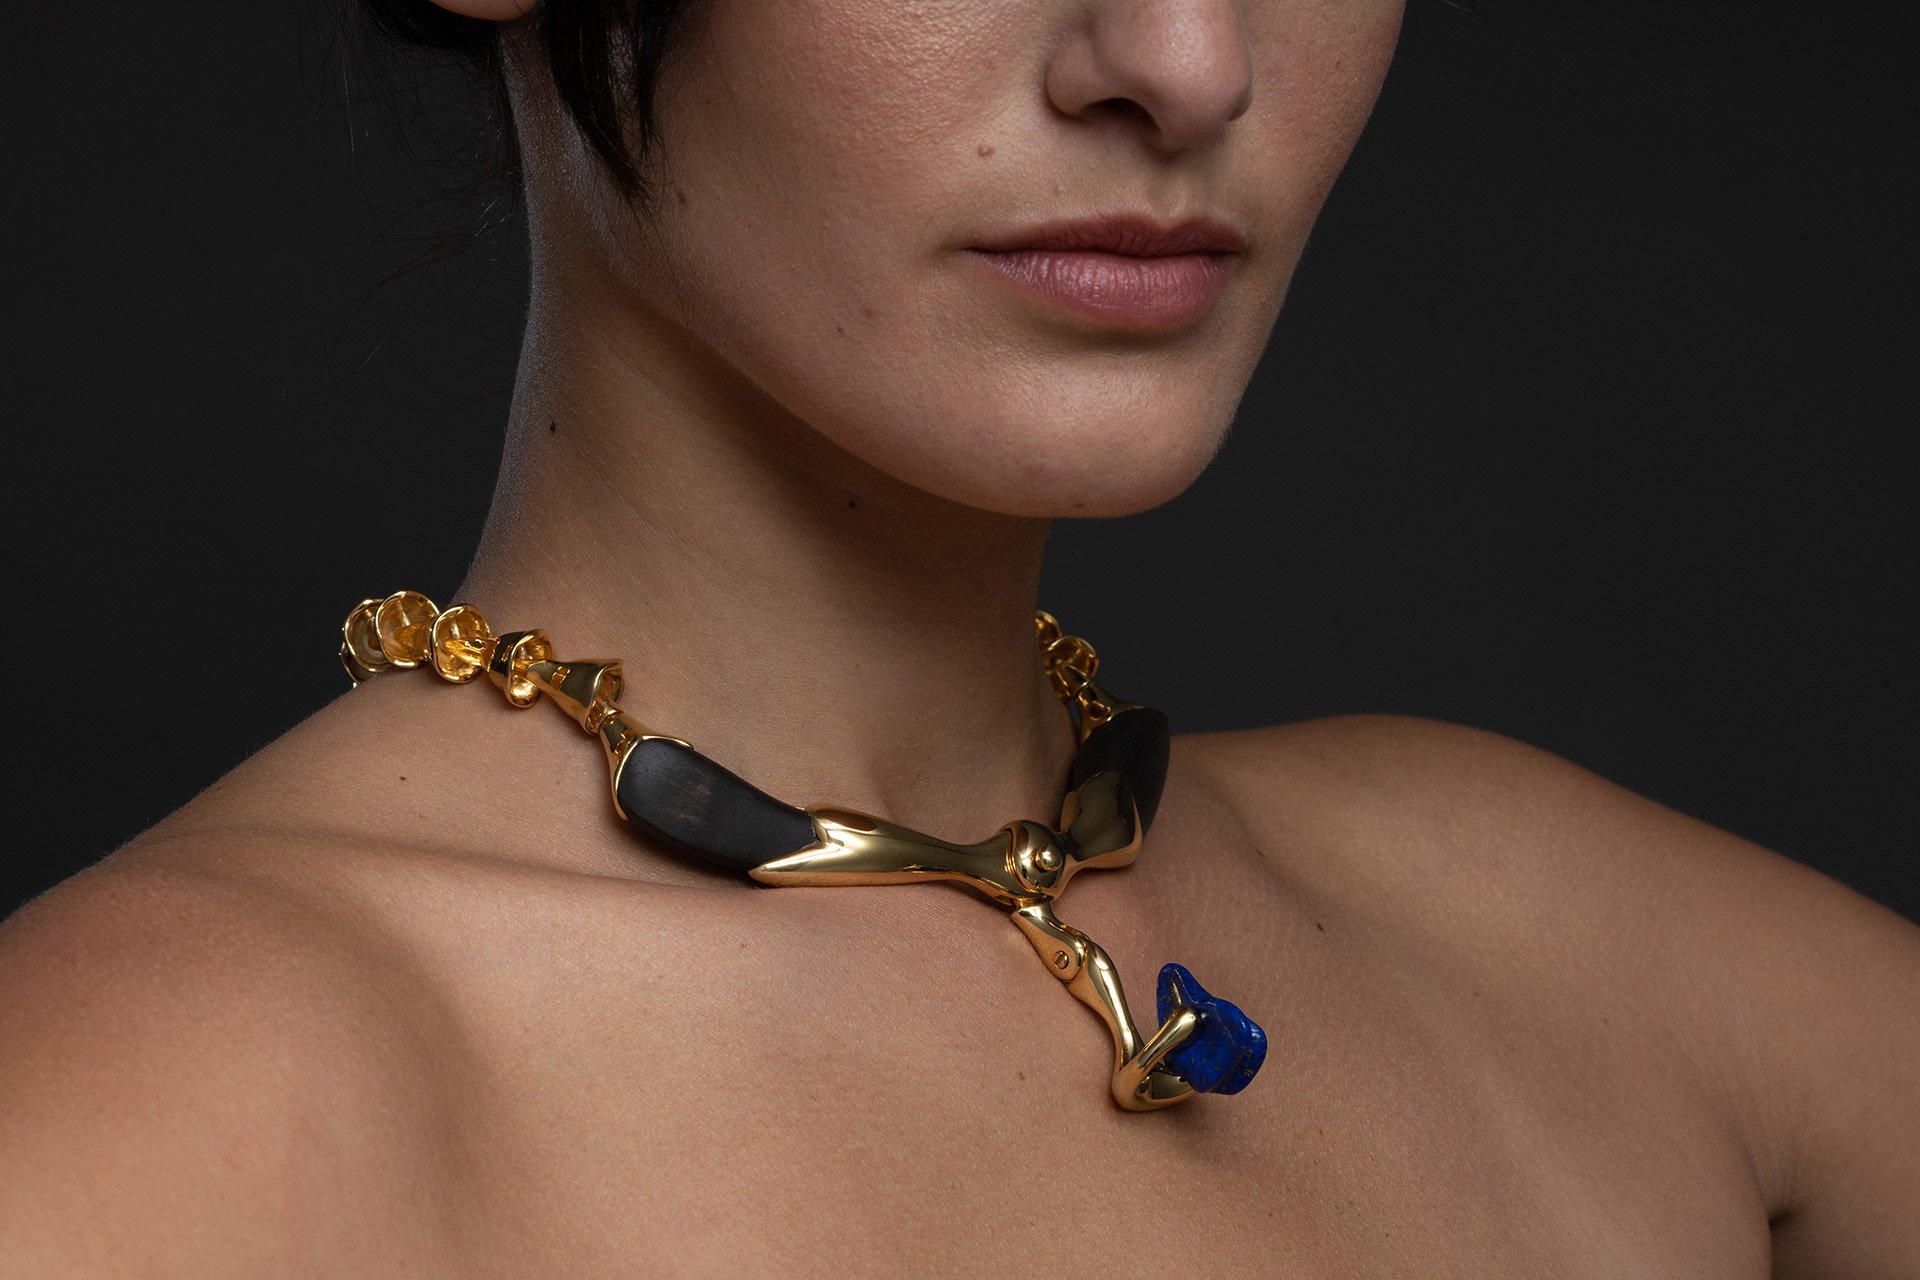 egypt-necklaces-collection-julio-martinez-barnetche-marion-friedmann-gallery-LR-egypt40.jpg